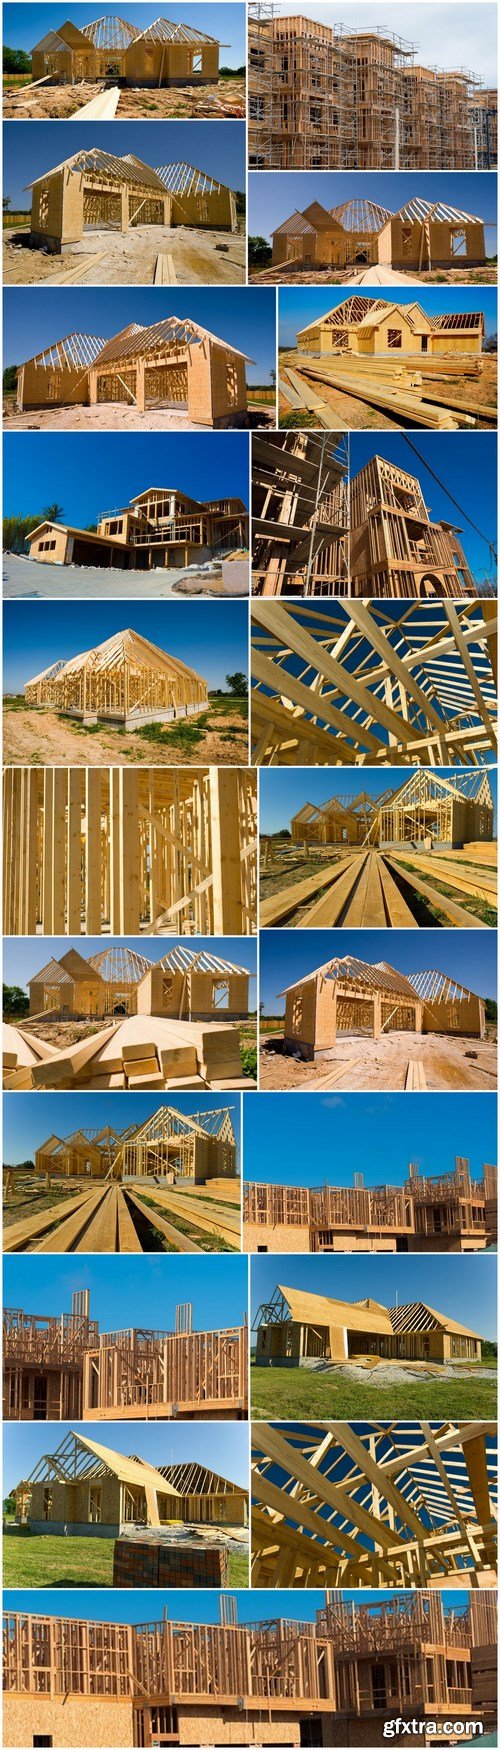 New house under construction - 21xUHQ JPEG Photo Stock